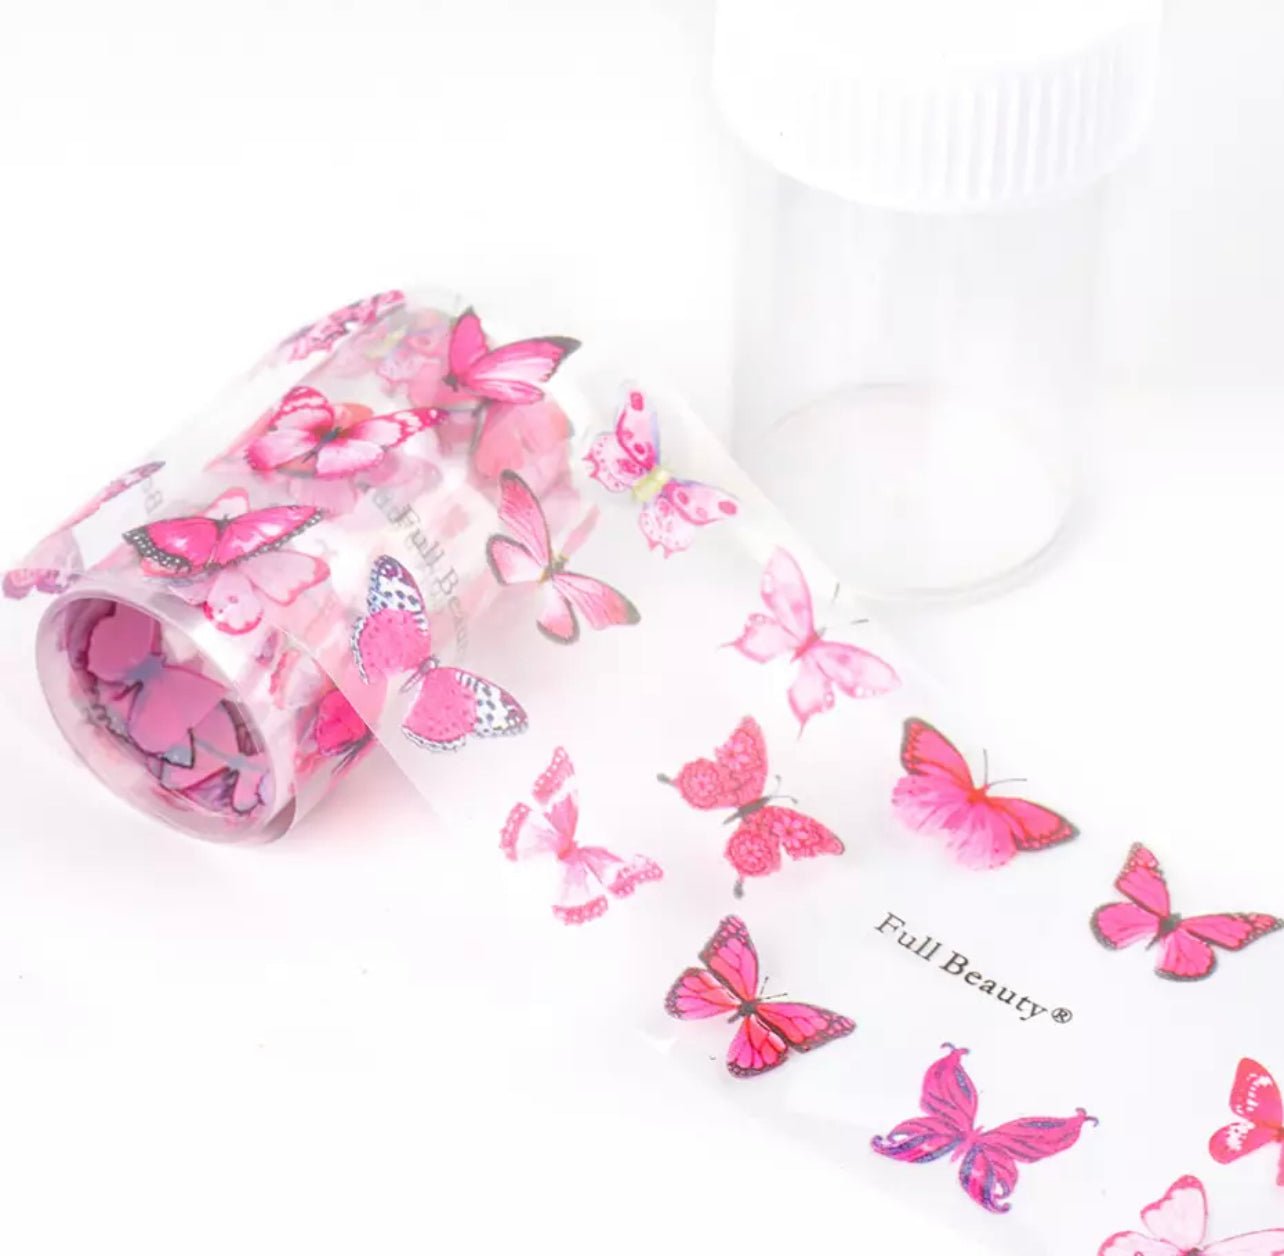 Transferfolie Butterfly Pink - Doriana Cosmetics GmbH